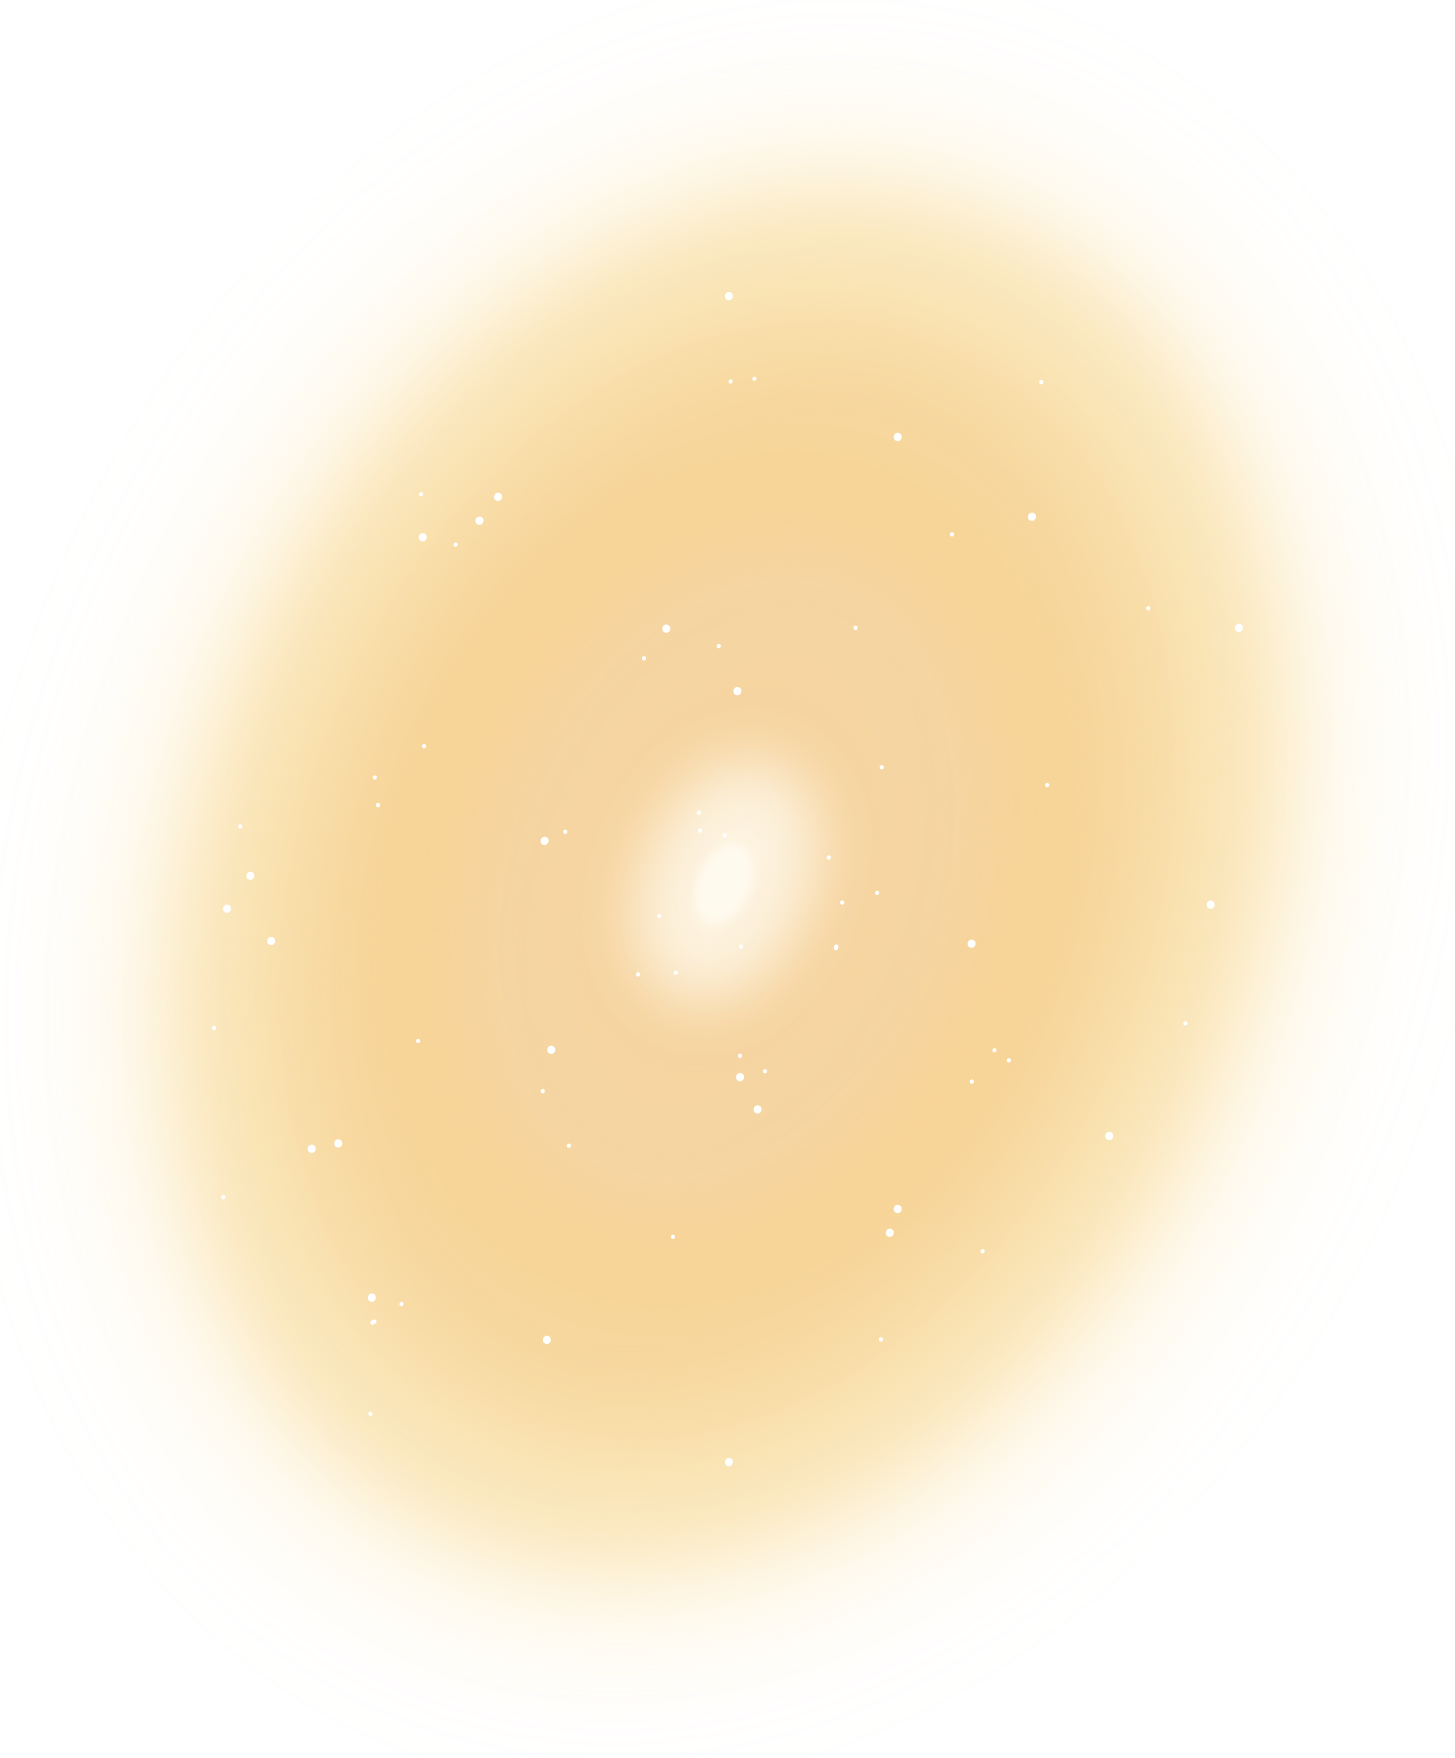 Elliptical Galaxy (Yellow) | NASA Universe Exploration